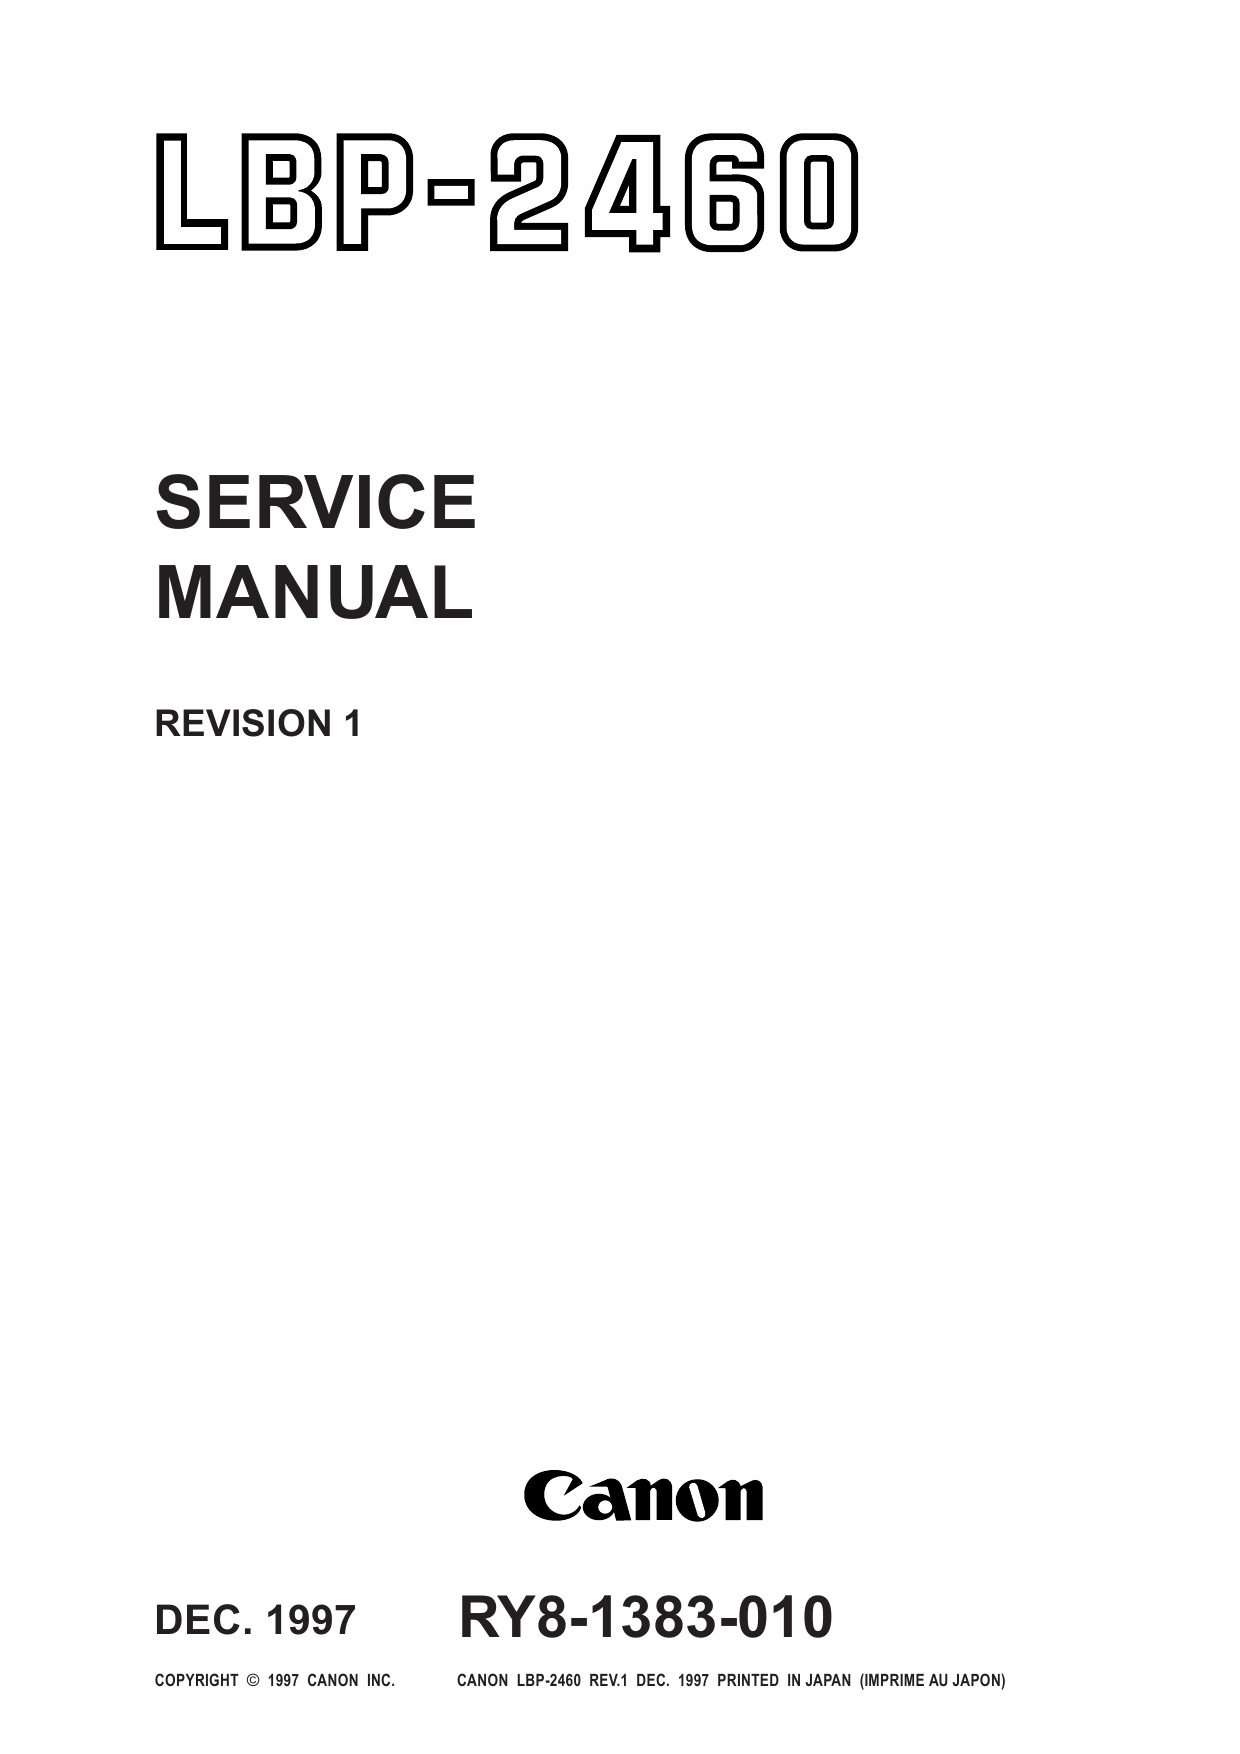 Canon imageCLASS LBP-2460 Service Manual-1